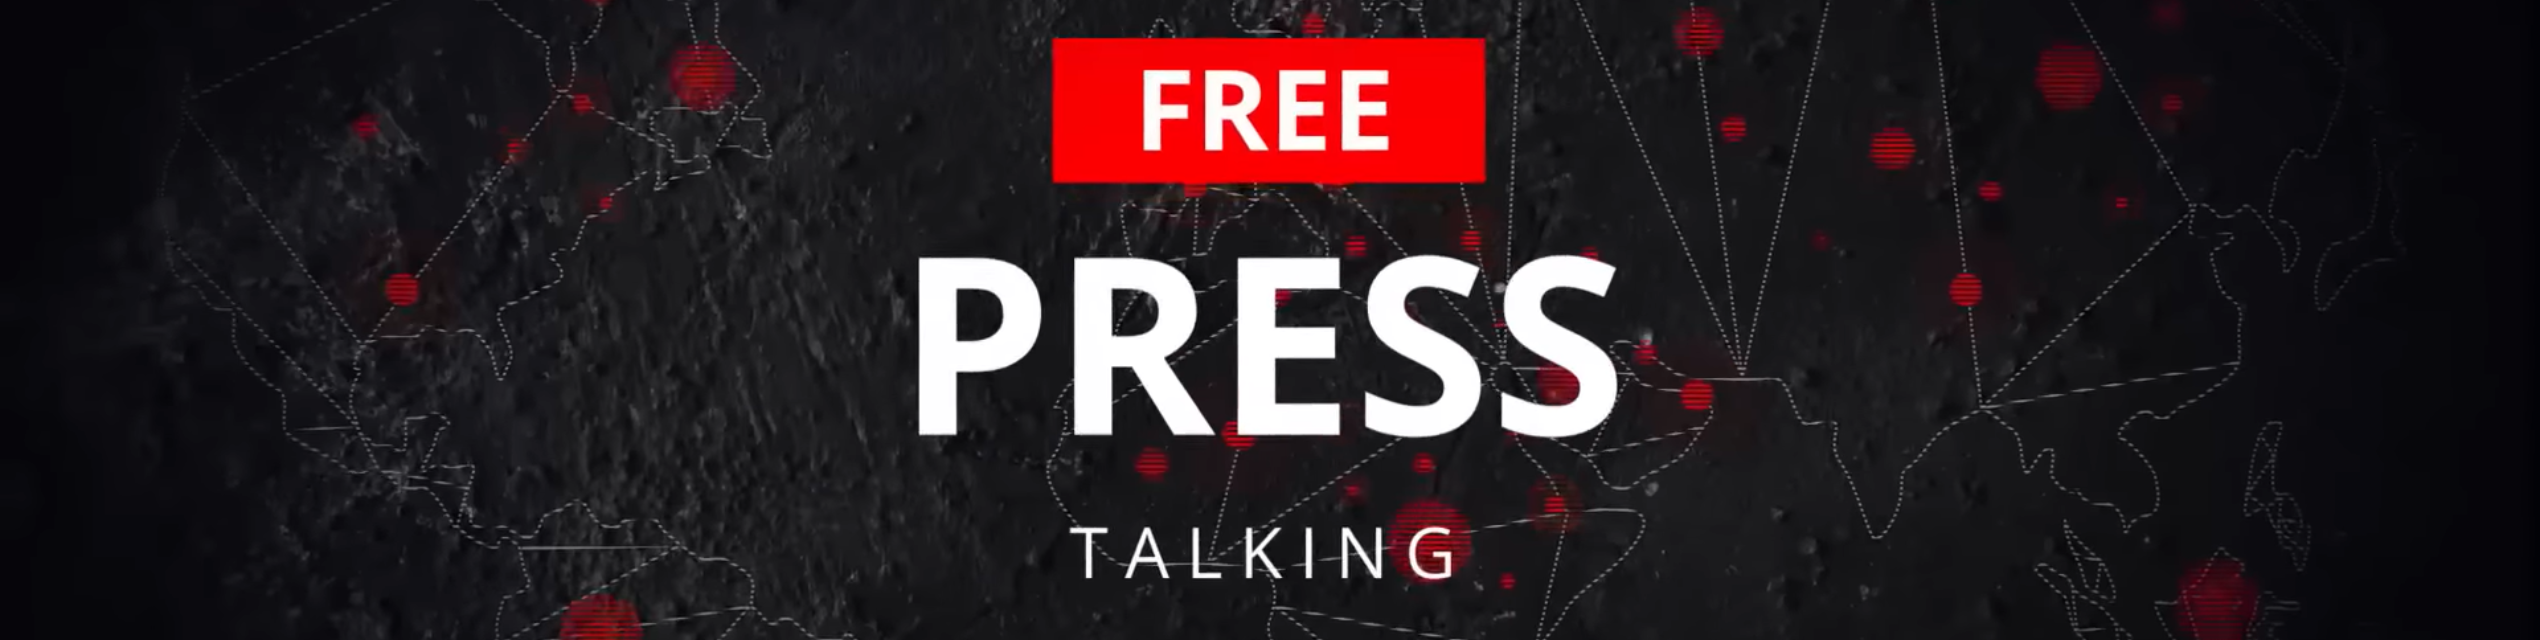 Visual Campaign page - Free Press Talking